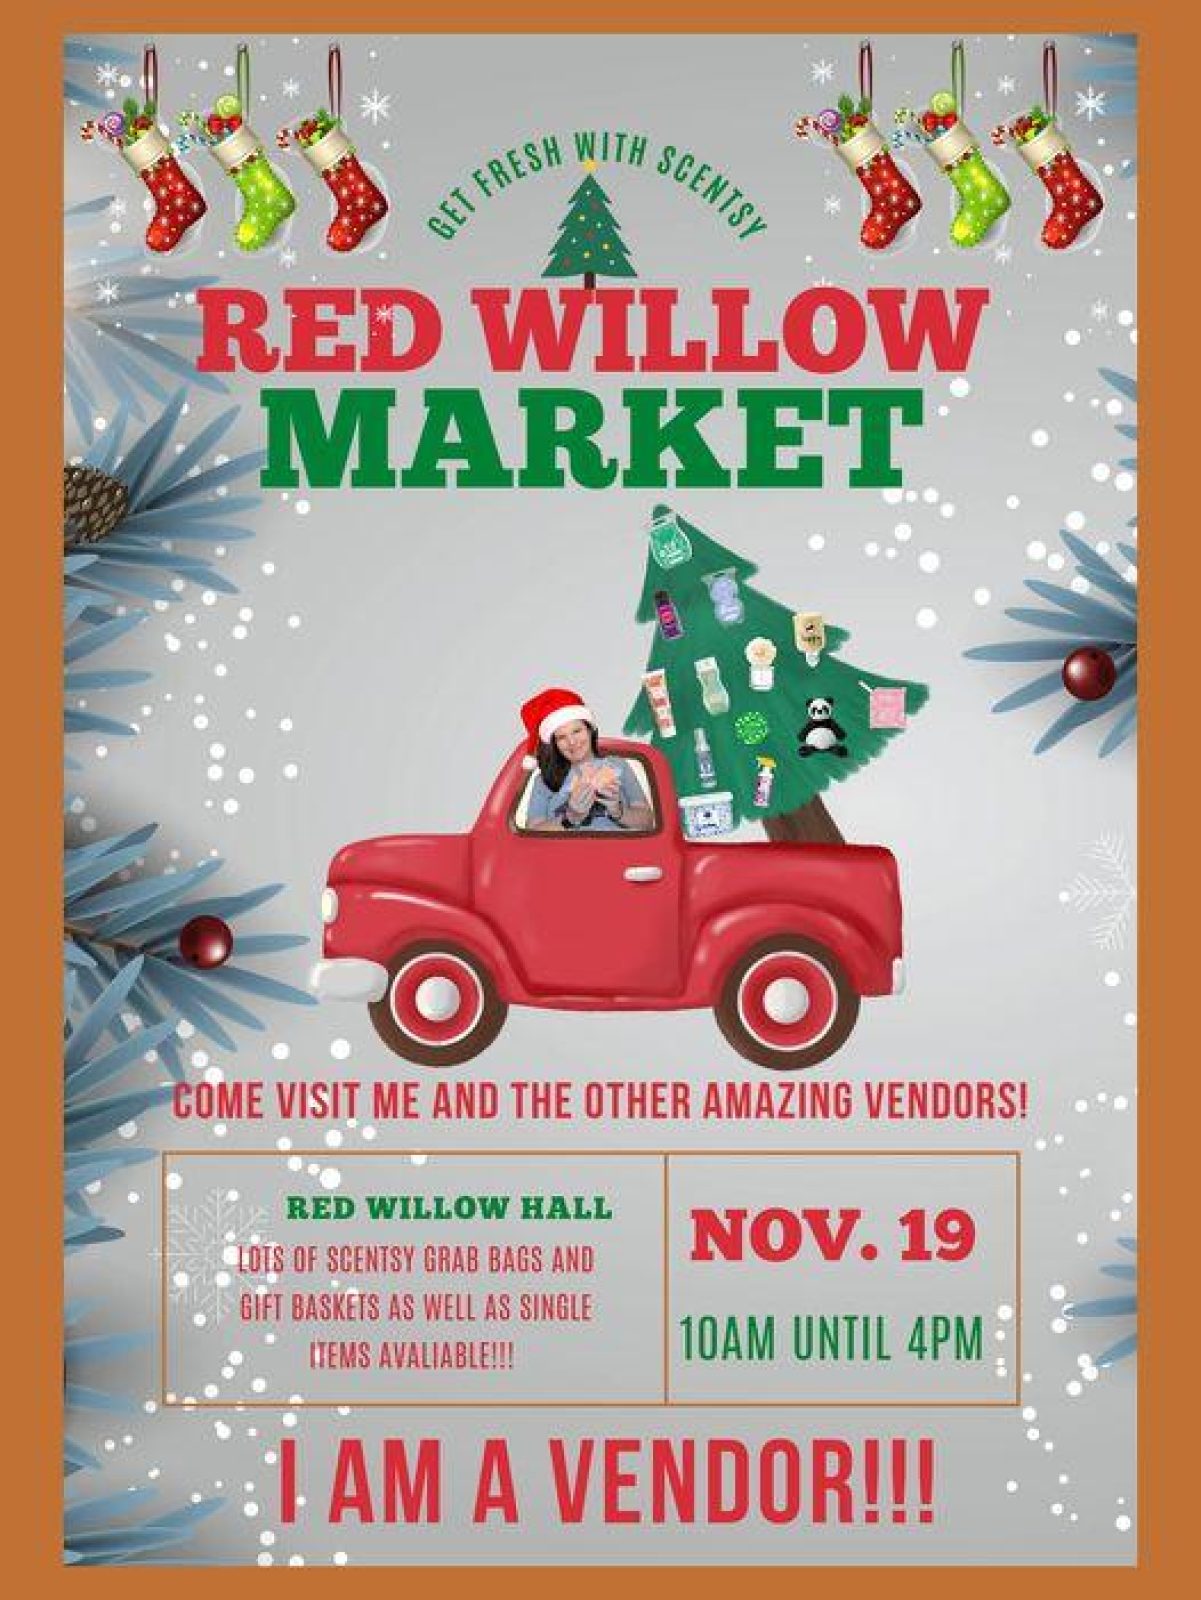 Red willow market nov 19